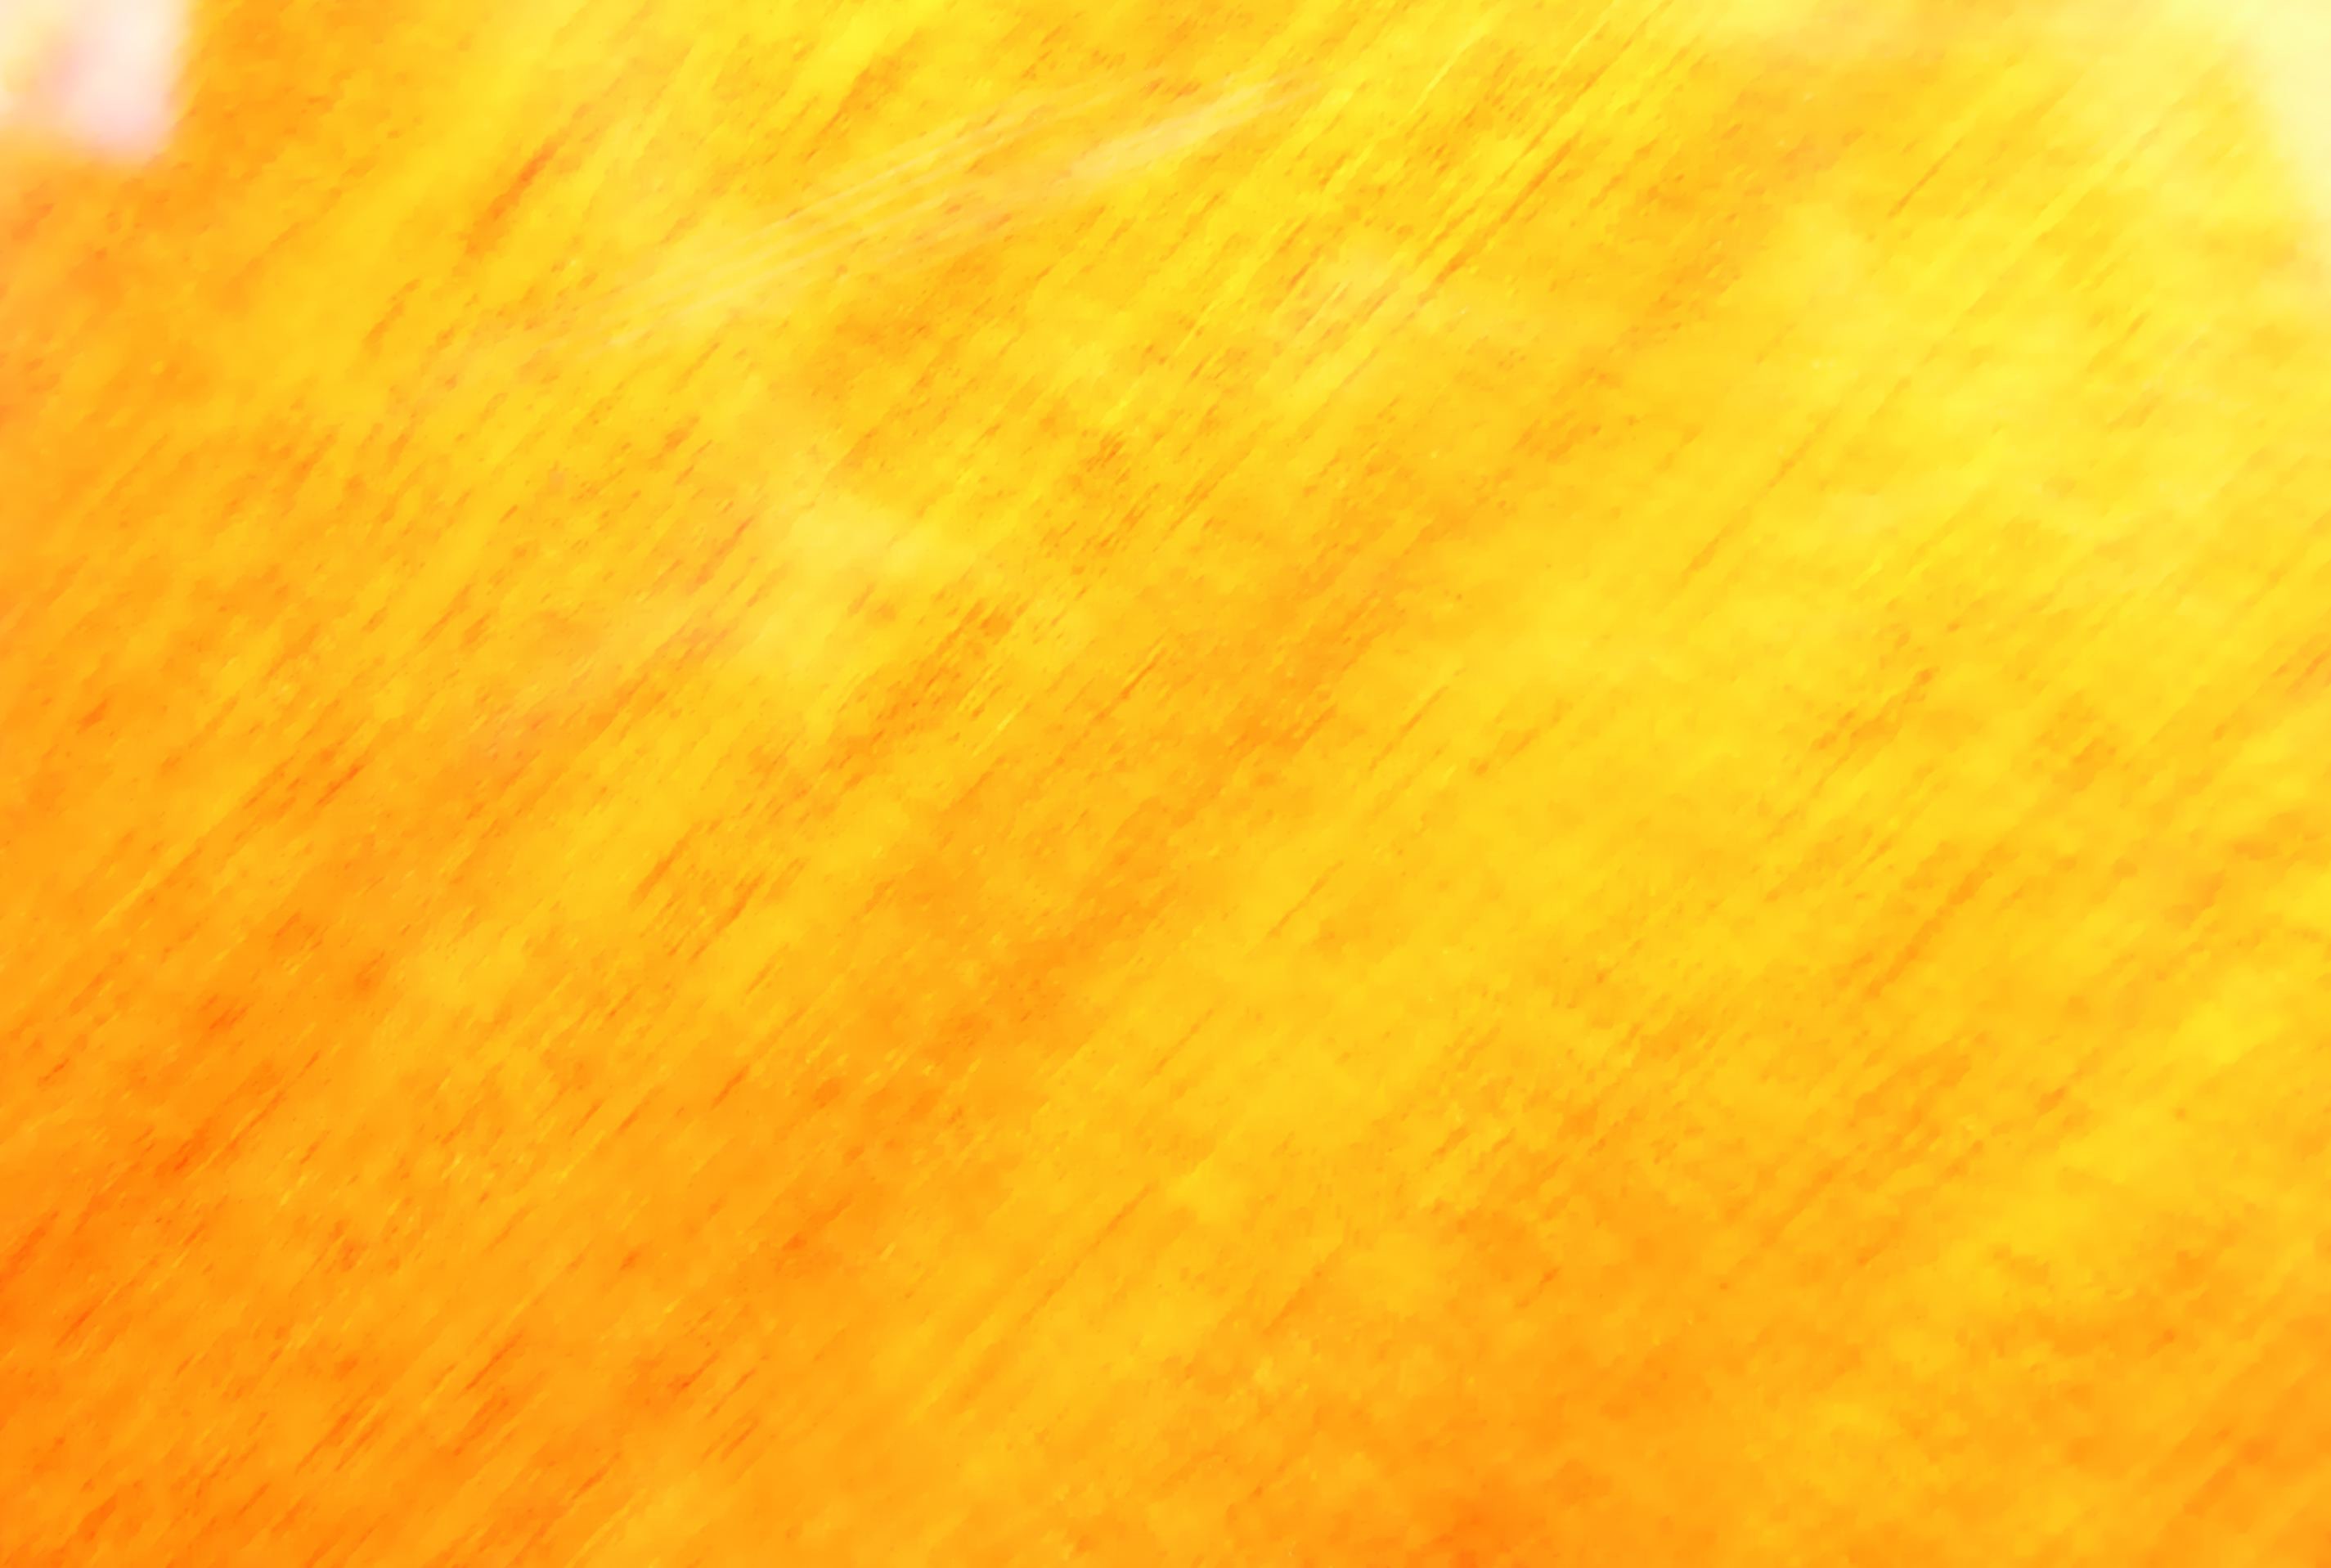 2850x1917 Solid Orange Backgrounds HD wallpaper background